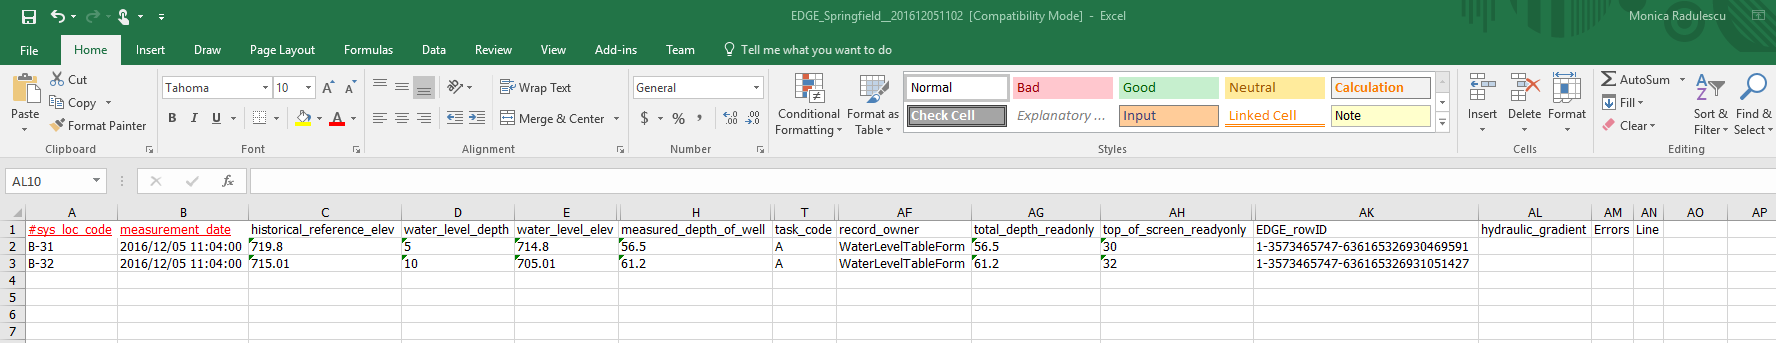 Excel Output of EDGE Field EDD